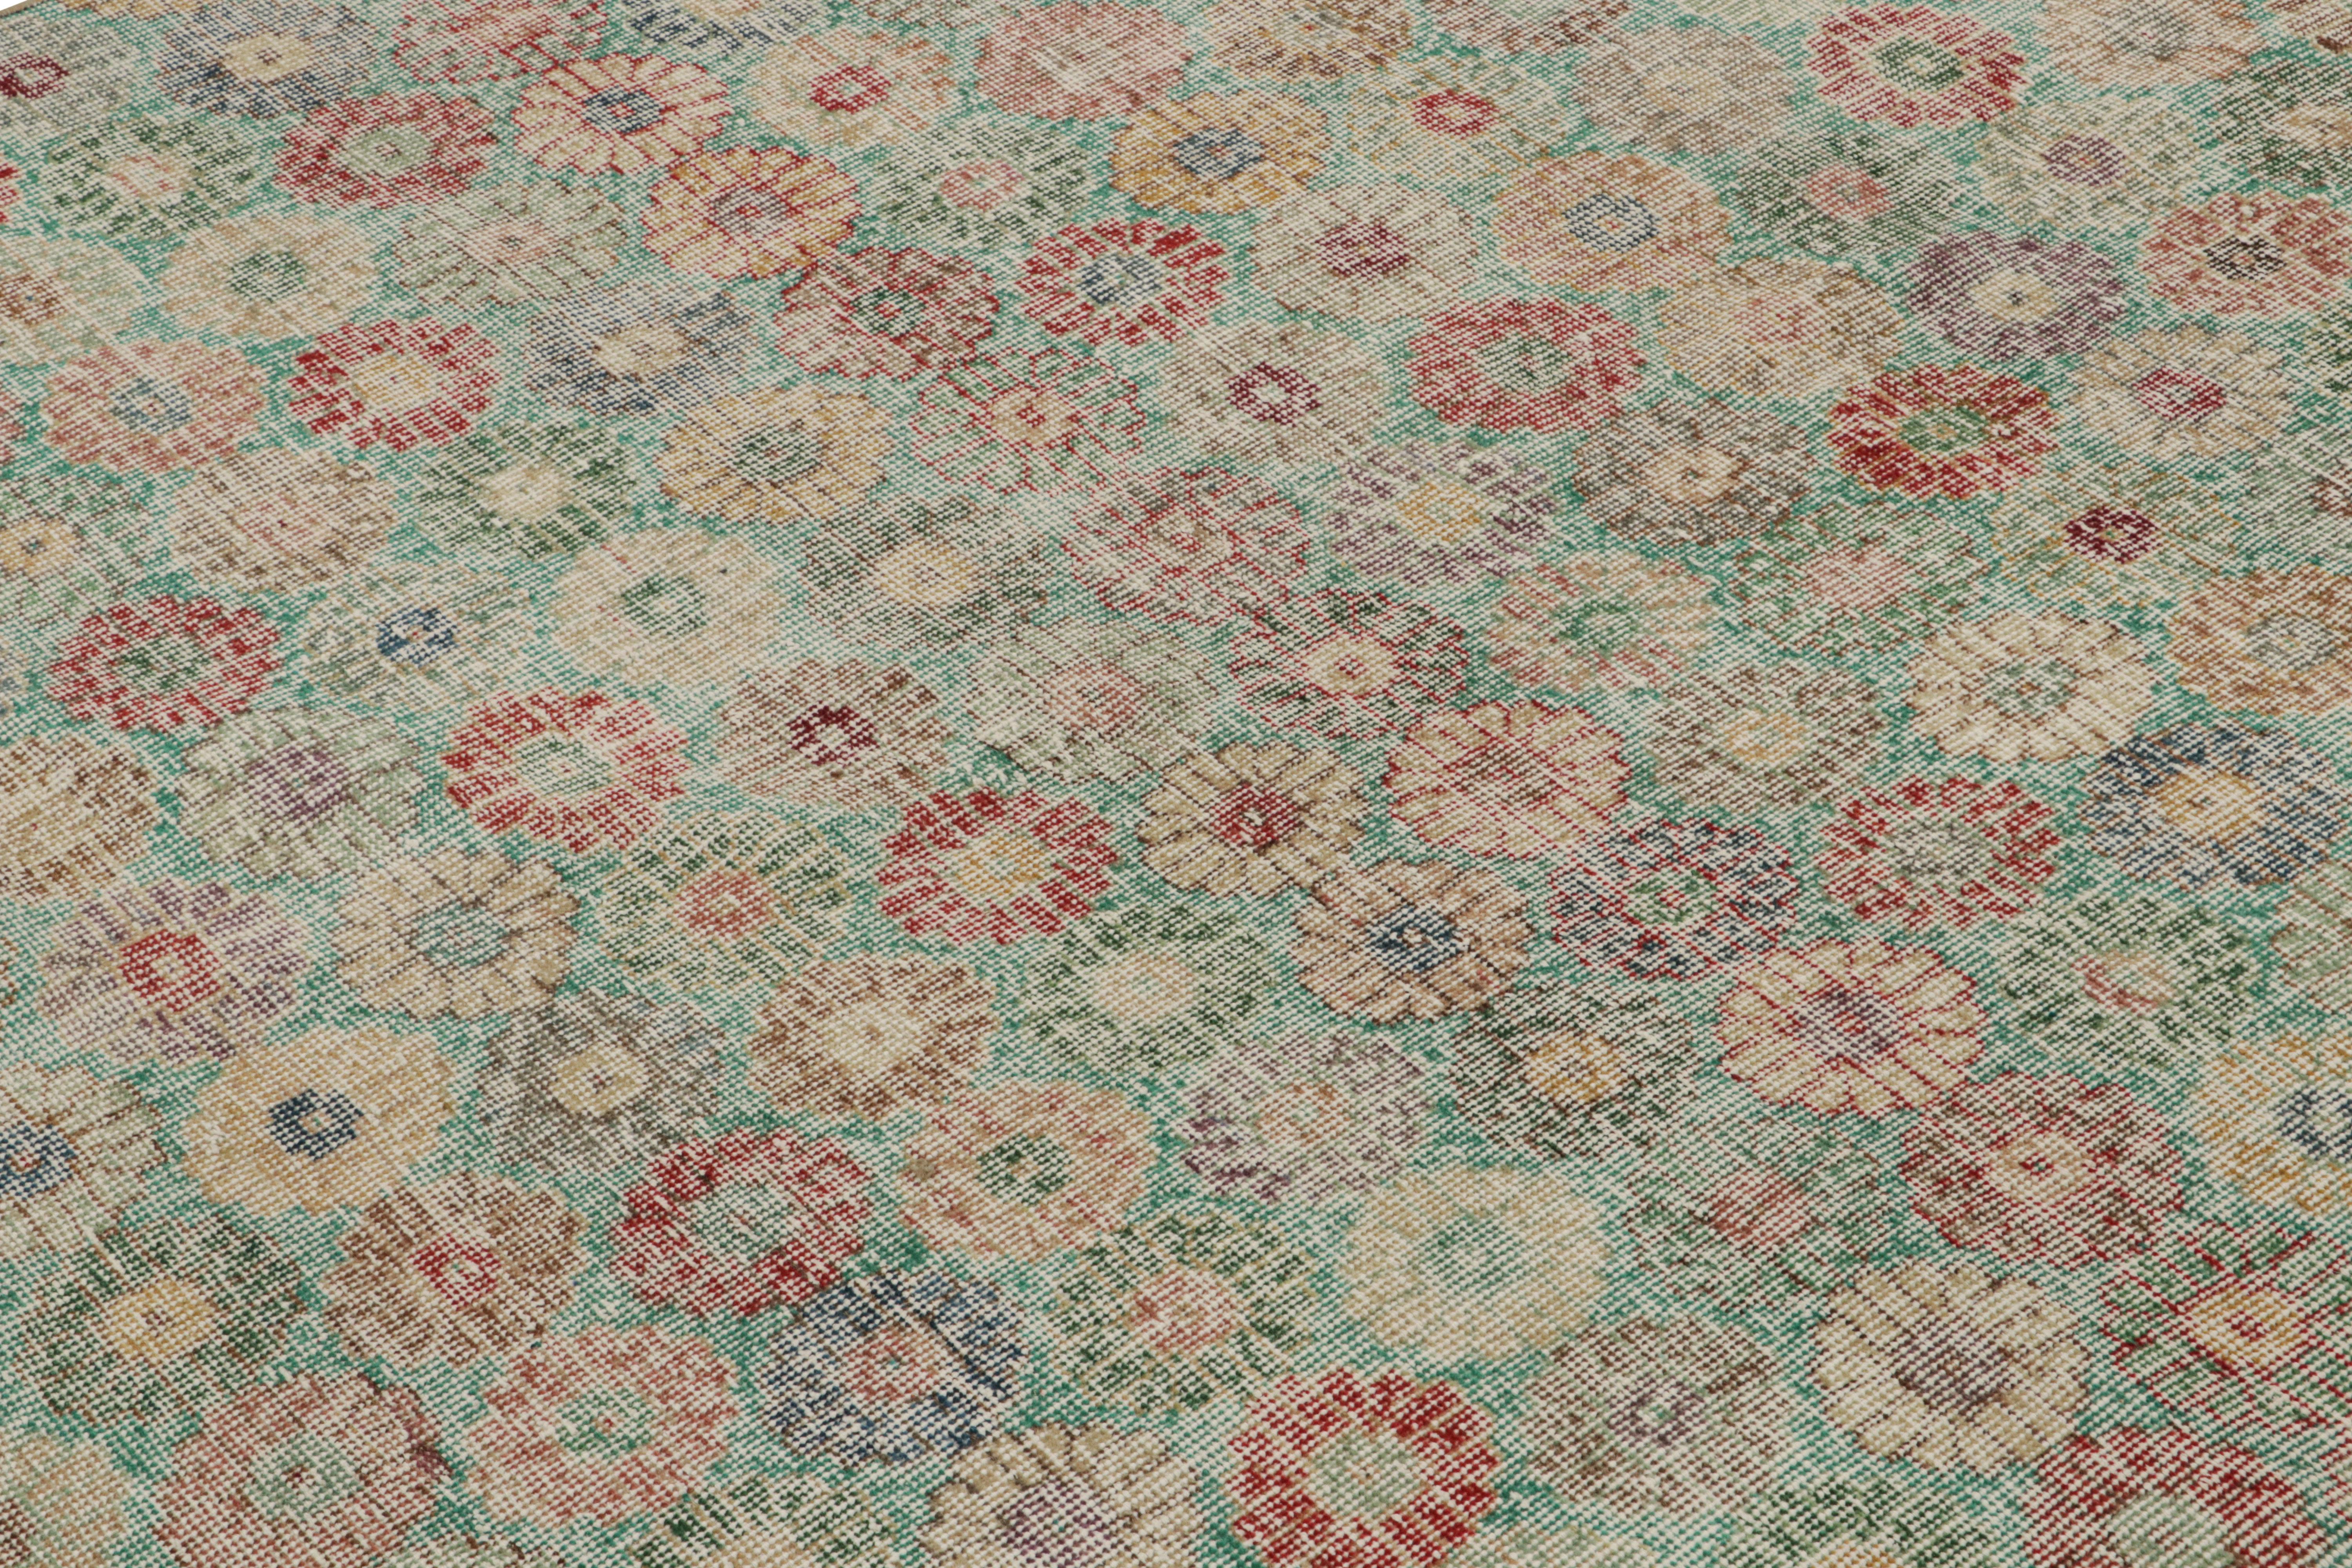 Hand-Knotted Vintage Zeki Müren Rug in Teal with Colorful Floral Patterns, from Rug & Kilim For Sale